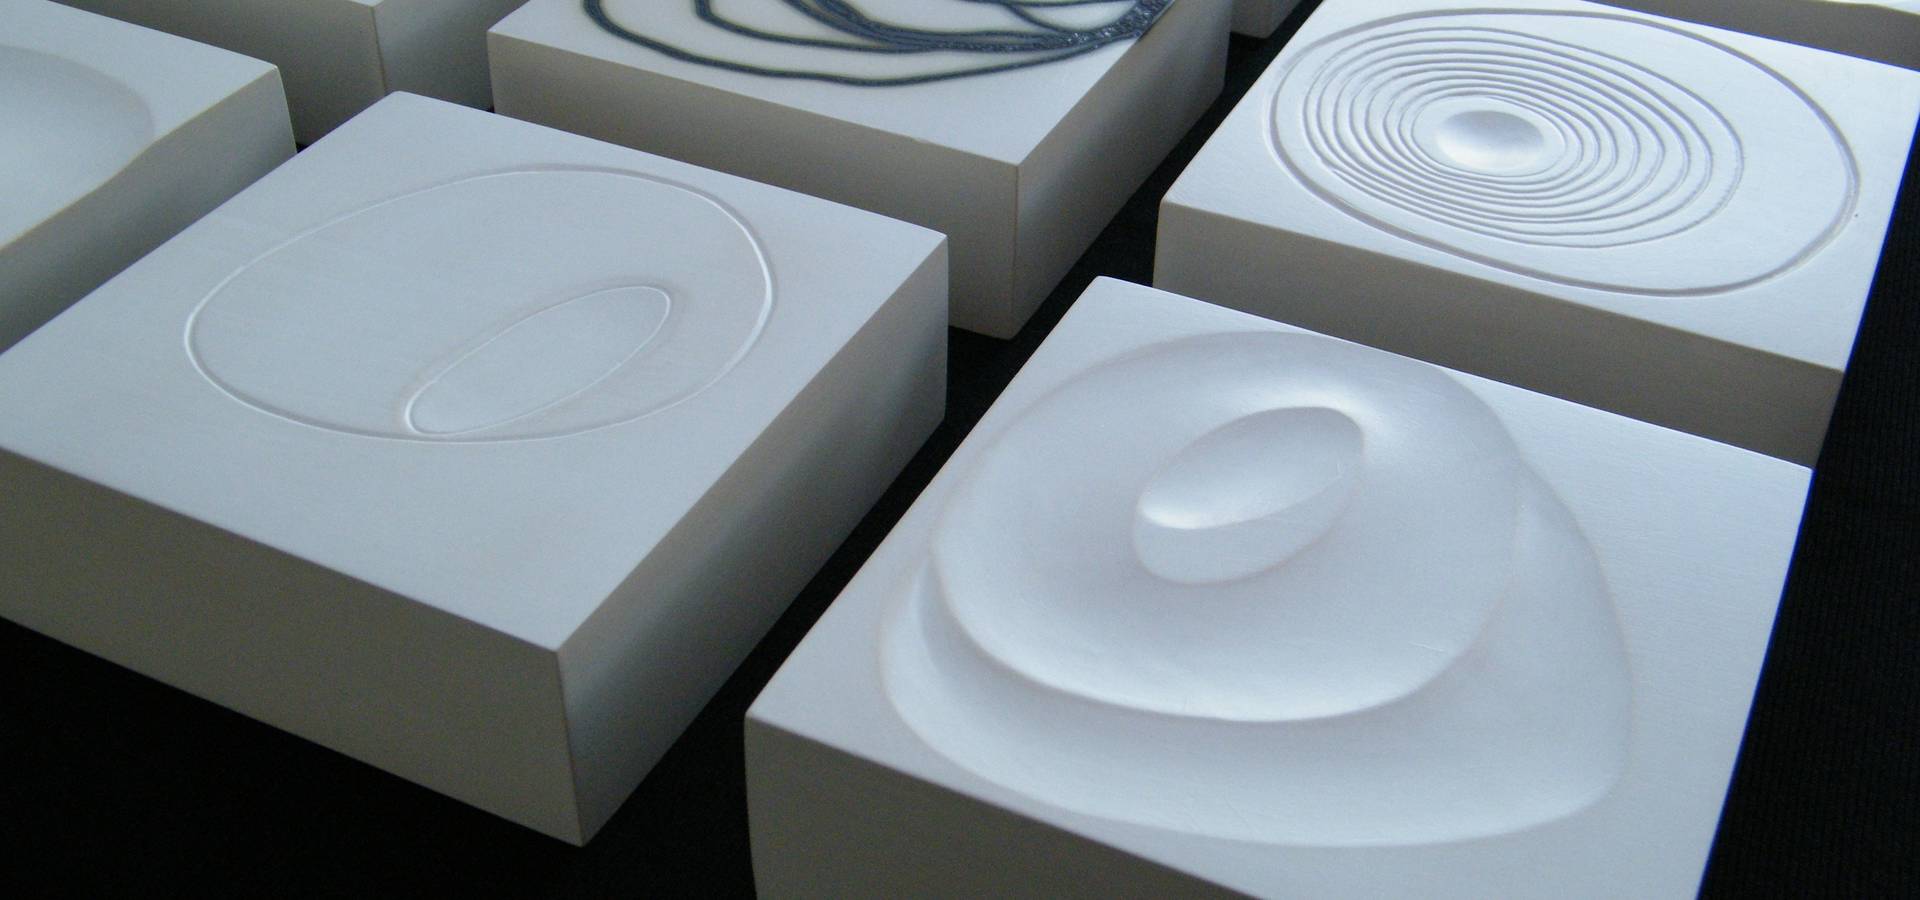 Marc Verbruggen—ceramic art